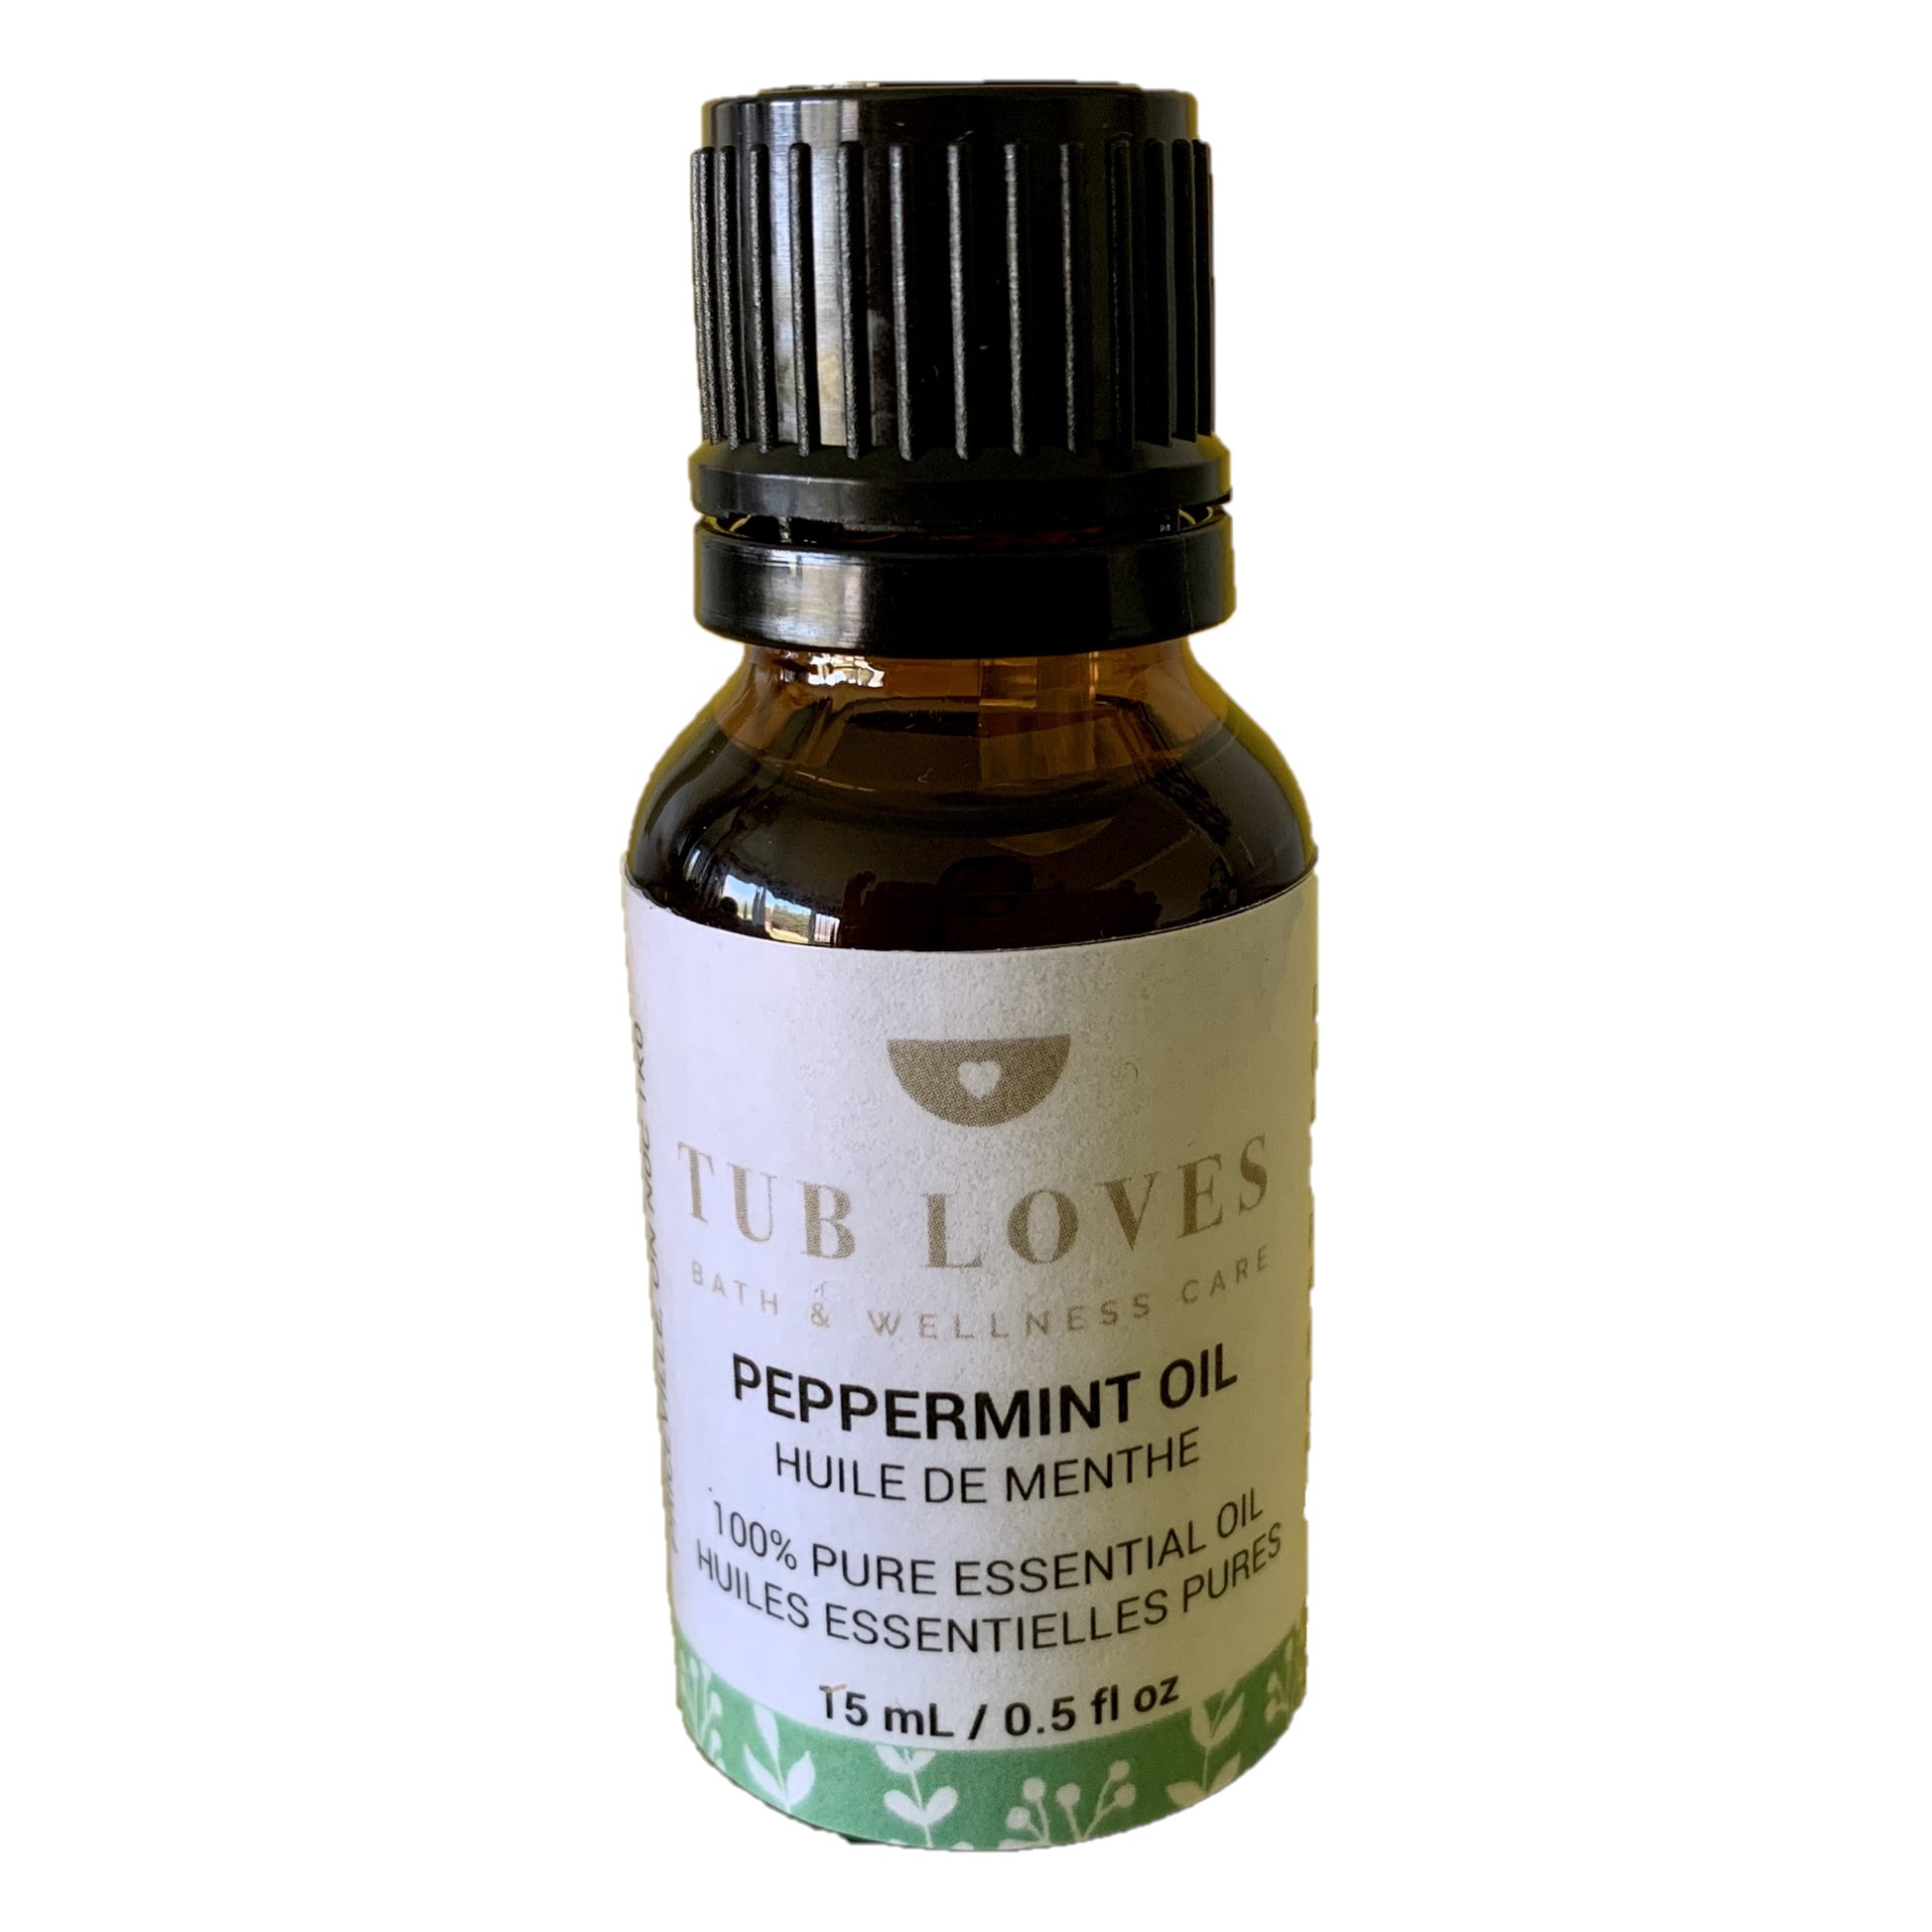 Peppermint Essential Oil - Tub Loves